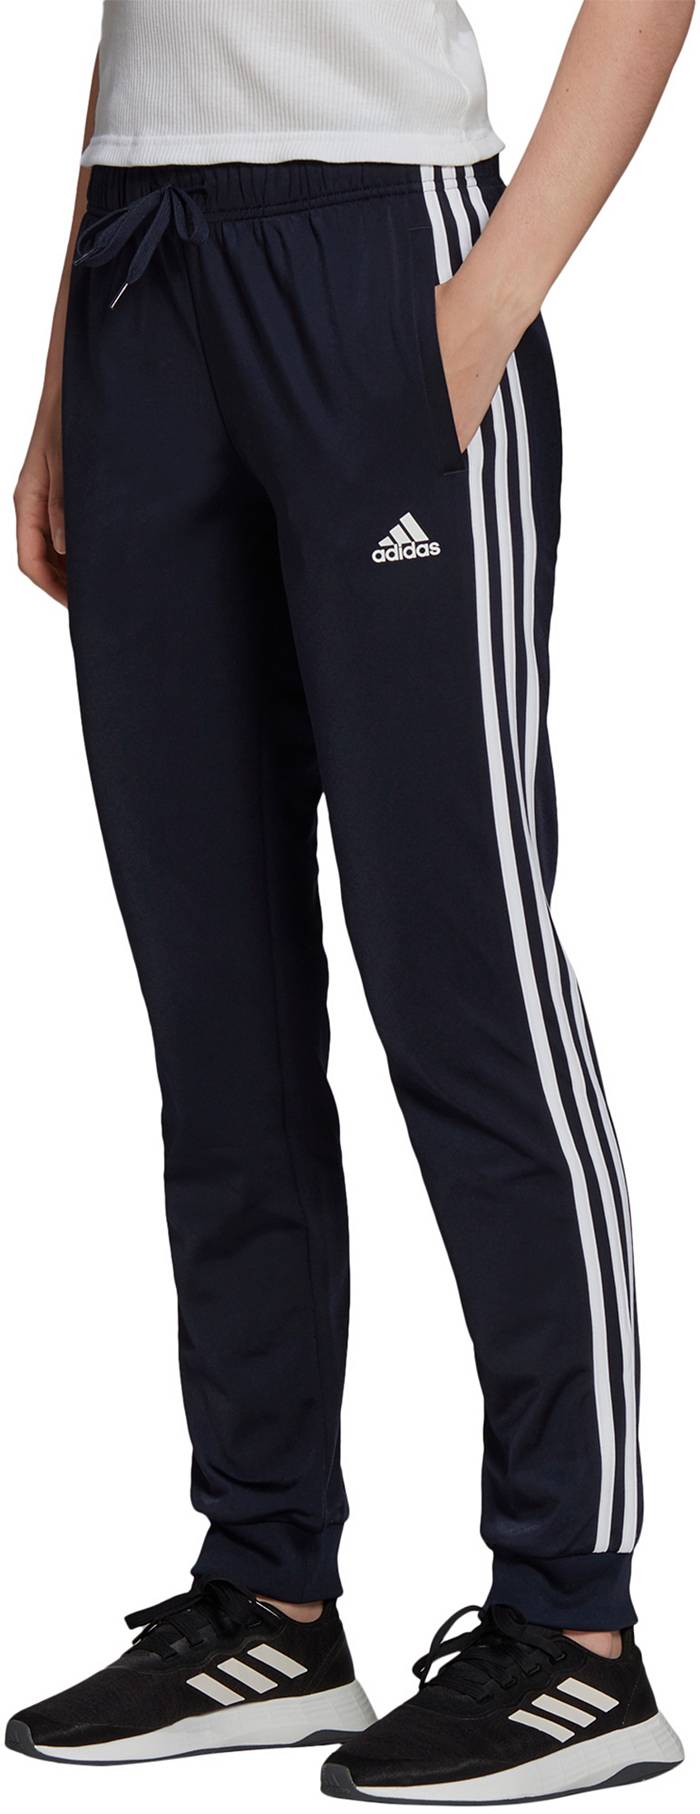 adidas, Pants, Nba Memphis Grizzlies Warm Up Jogging Pants